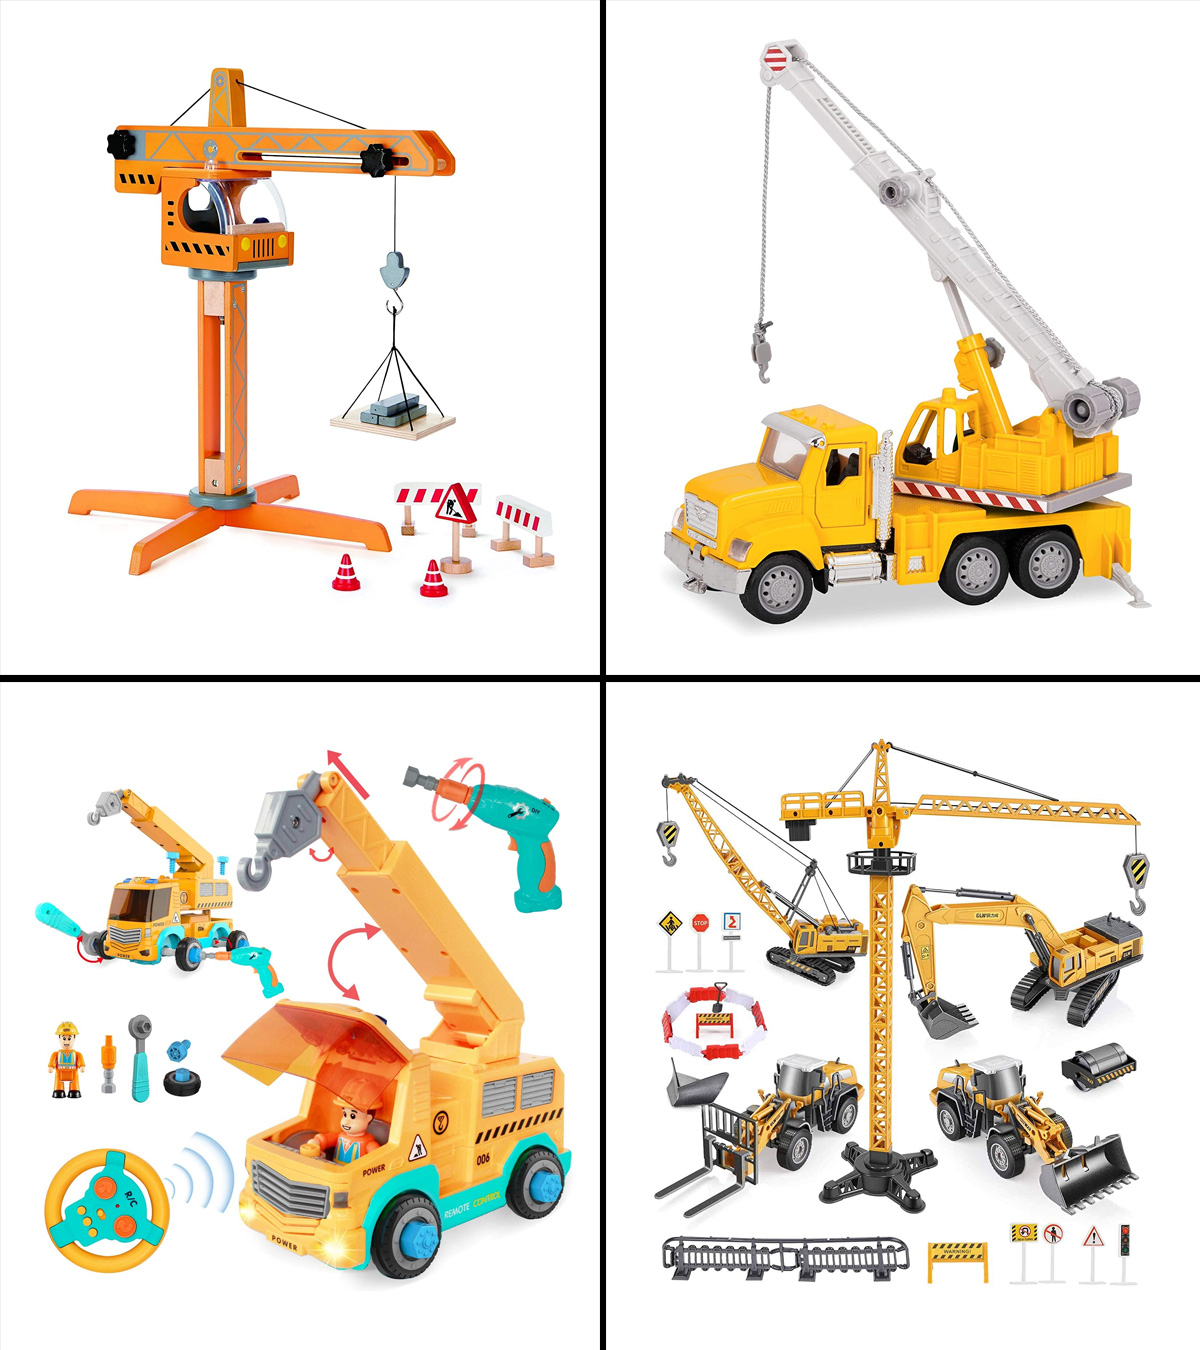 15 Best Toy Cranes For Kids' Indoor and Outdoor Play In 2023